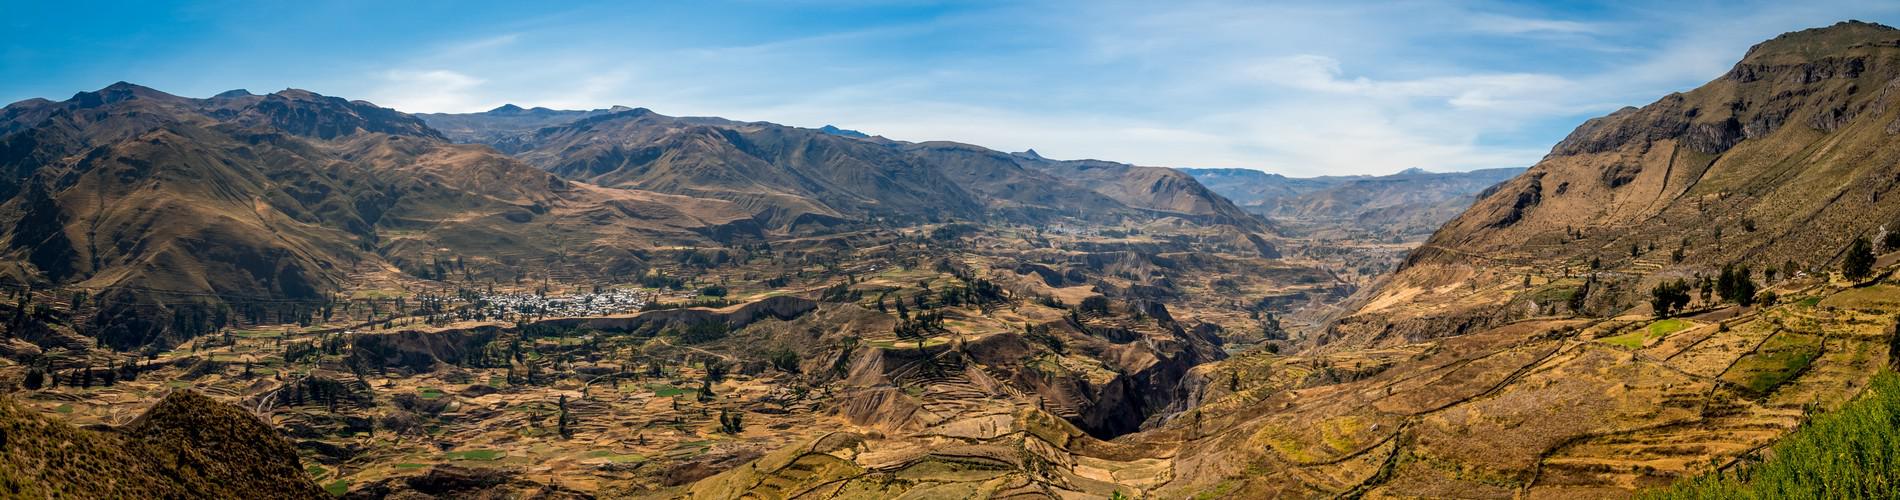 The Colca Canyon and the Andean condor